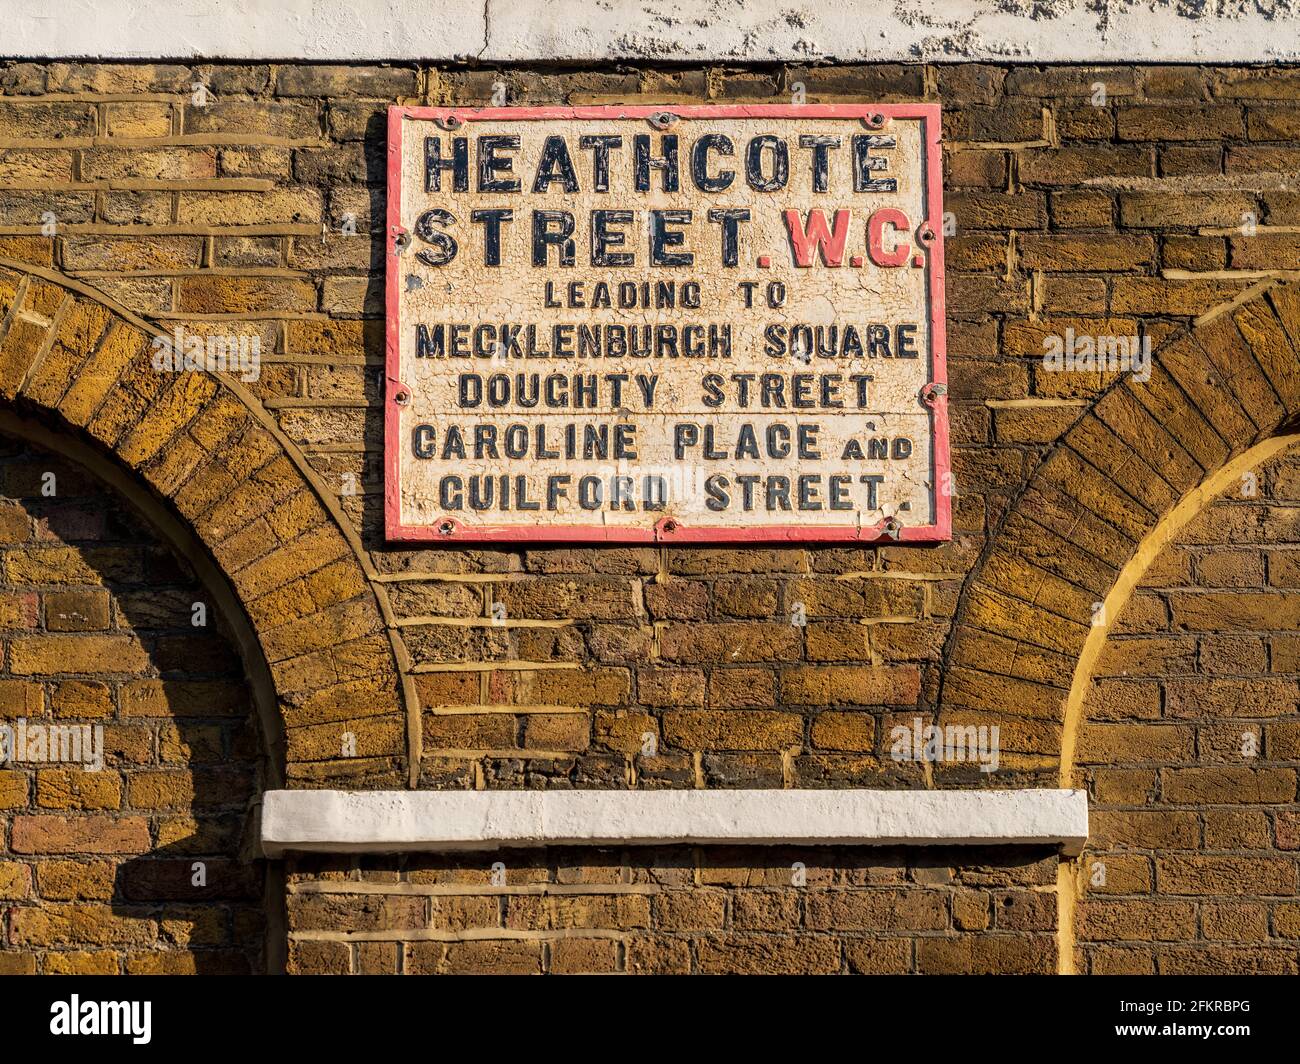 Heathcote Street WC London Street Sign - Vintage London Street Sign in Richtung Heathcote Street, die zum Meckenburgh Square, Doughty St, Caroline Place führt. Stockfoto